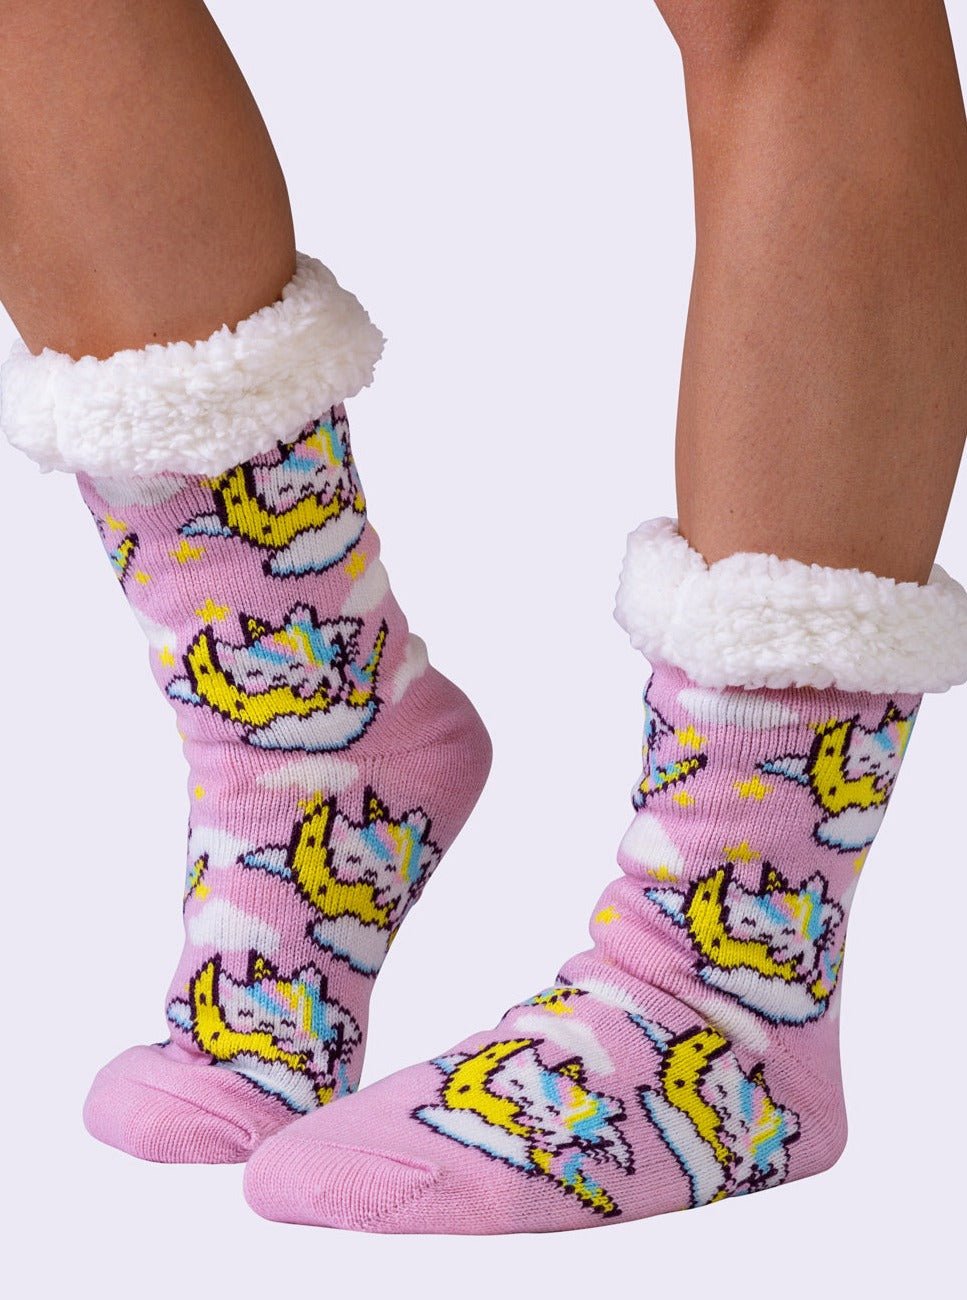 NEW Unicorn Fluffy Slipper Socks - Shnugz